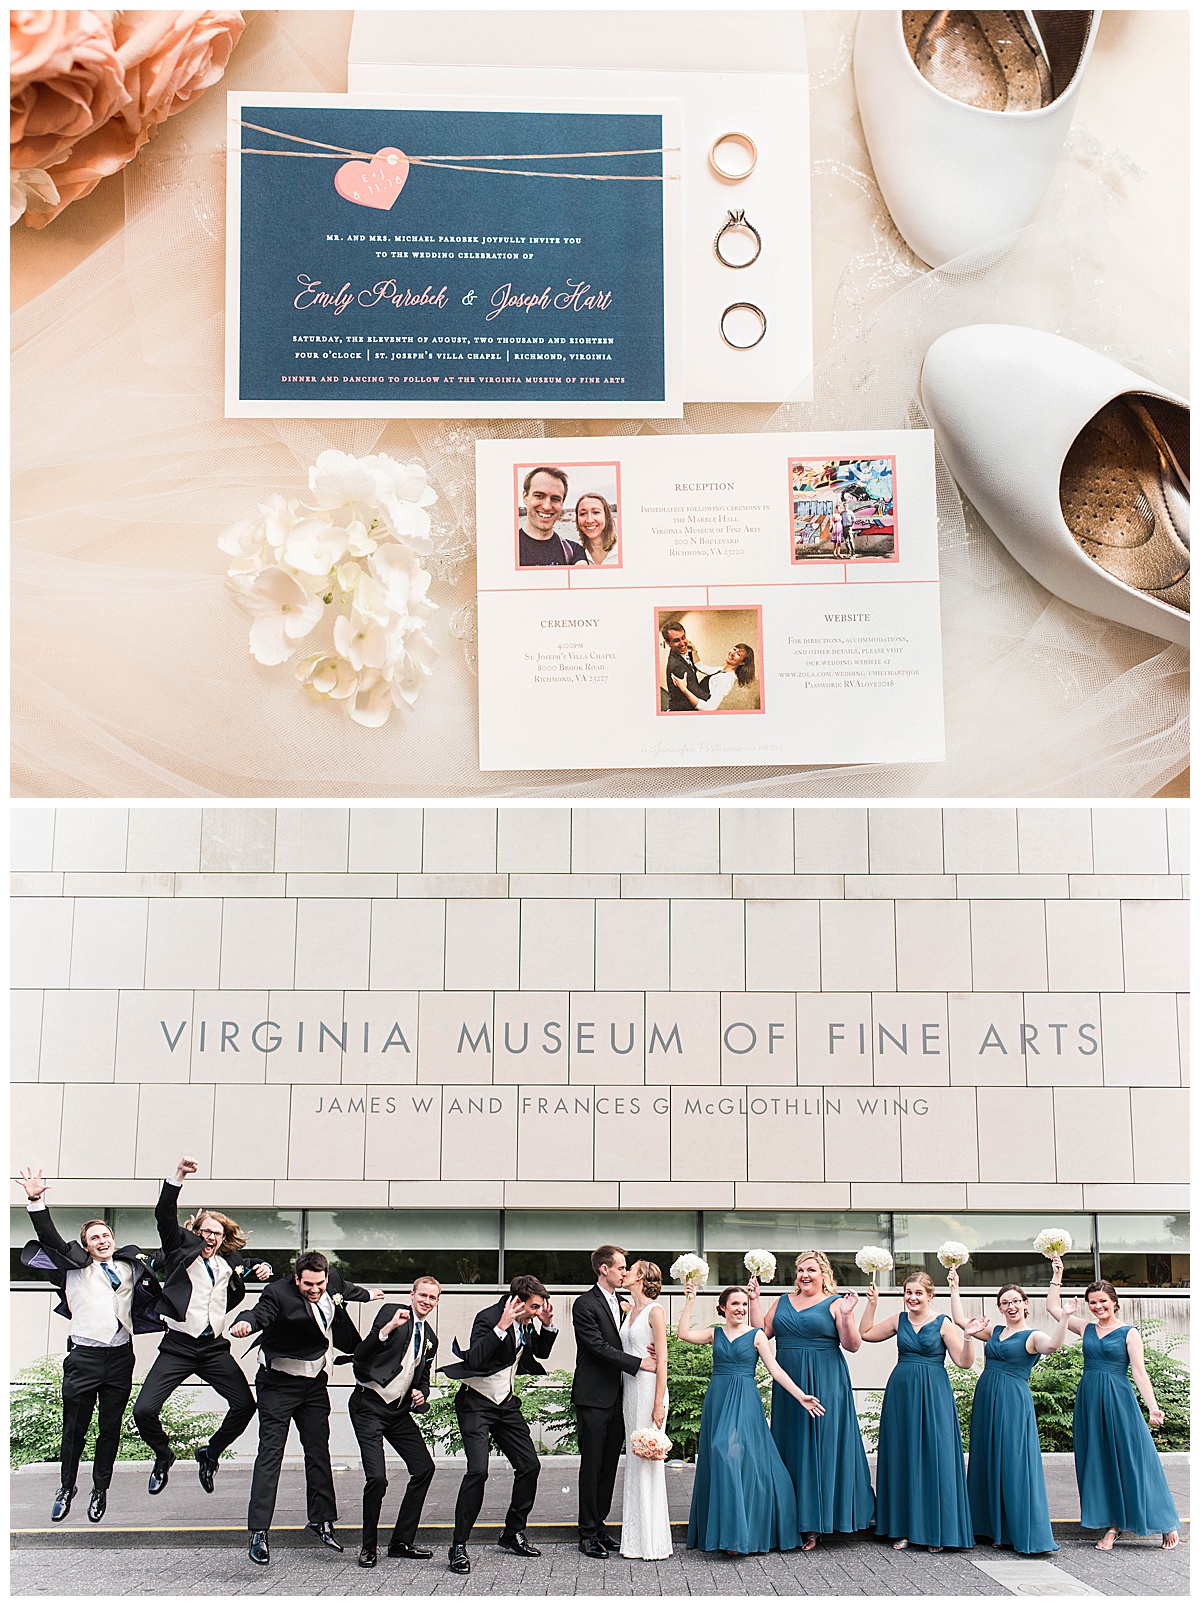 Virginia Museum of Fine Arts Wedding: VMFA, invitation suite, wedding details, wedding party 